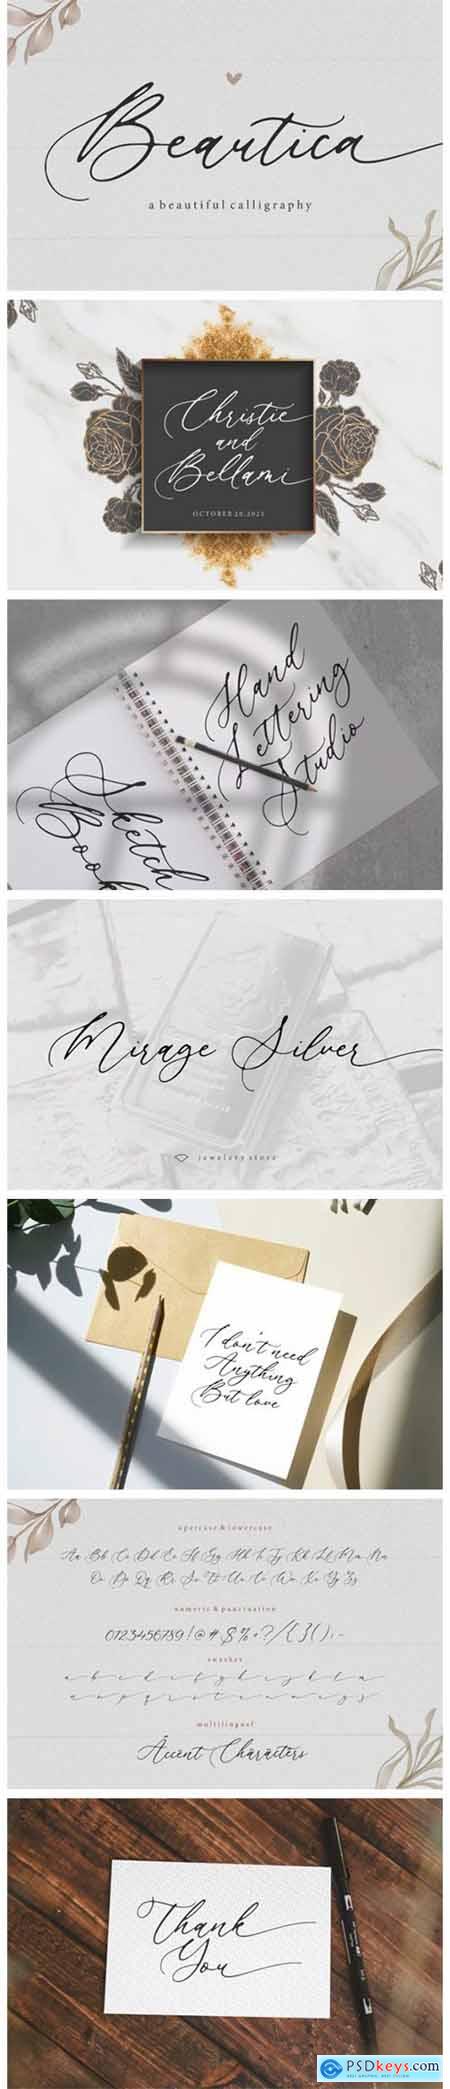 Beautica Beautiful Calligraphy Font